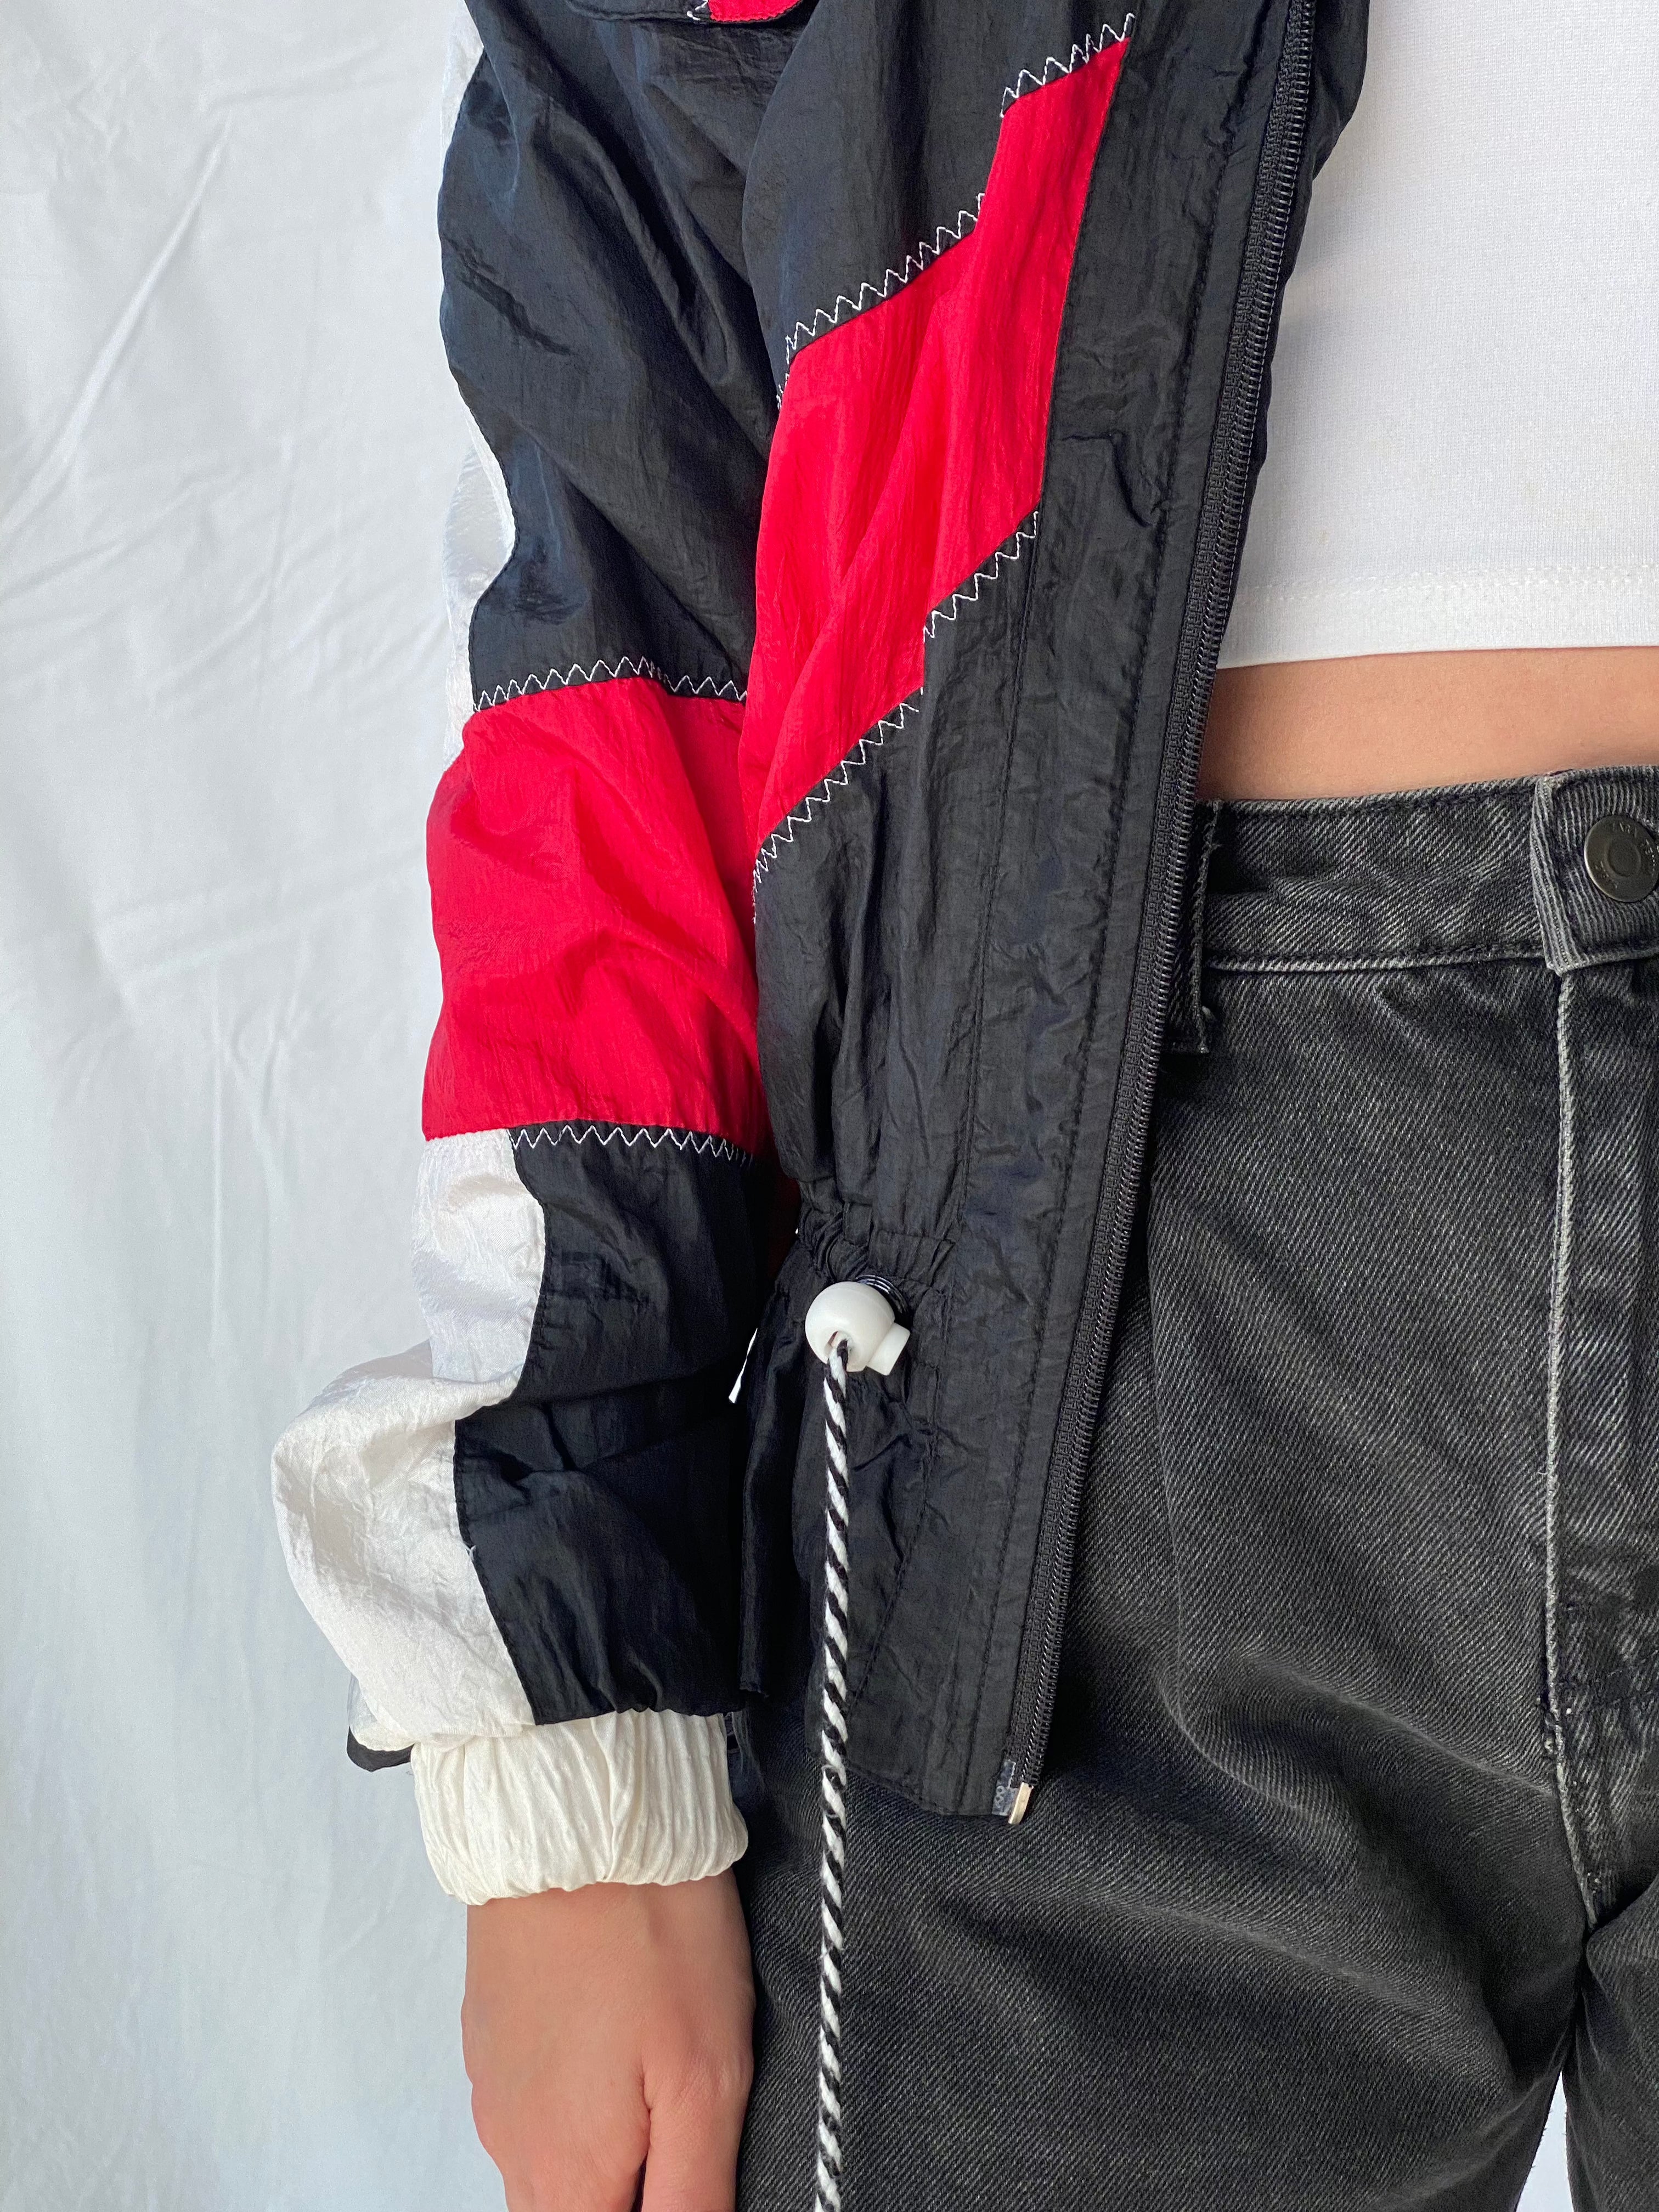 Vintage SUNTERRA Windbreaker Jacket - Balagan Vintage Windbreaker Jacket 90s, nylon, outerwear, vintage